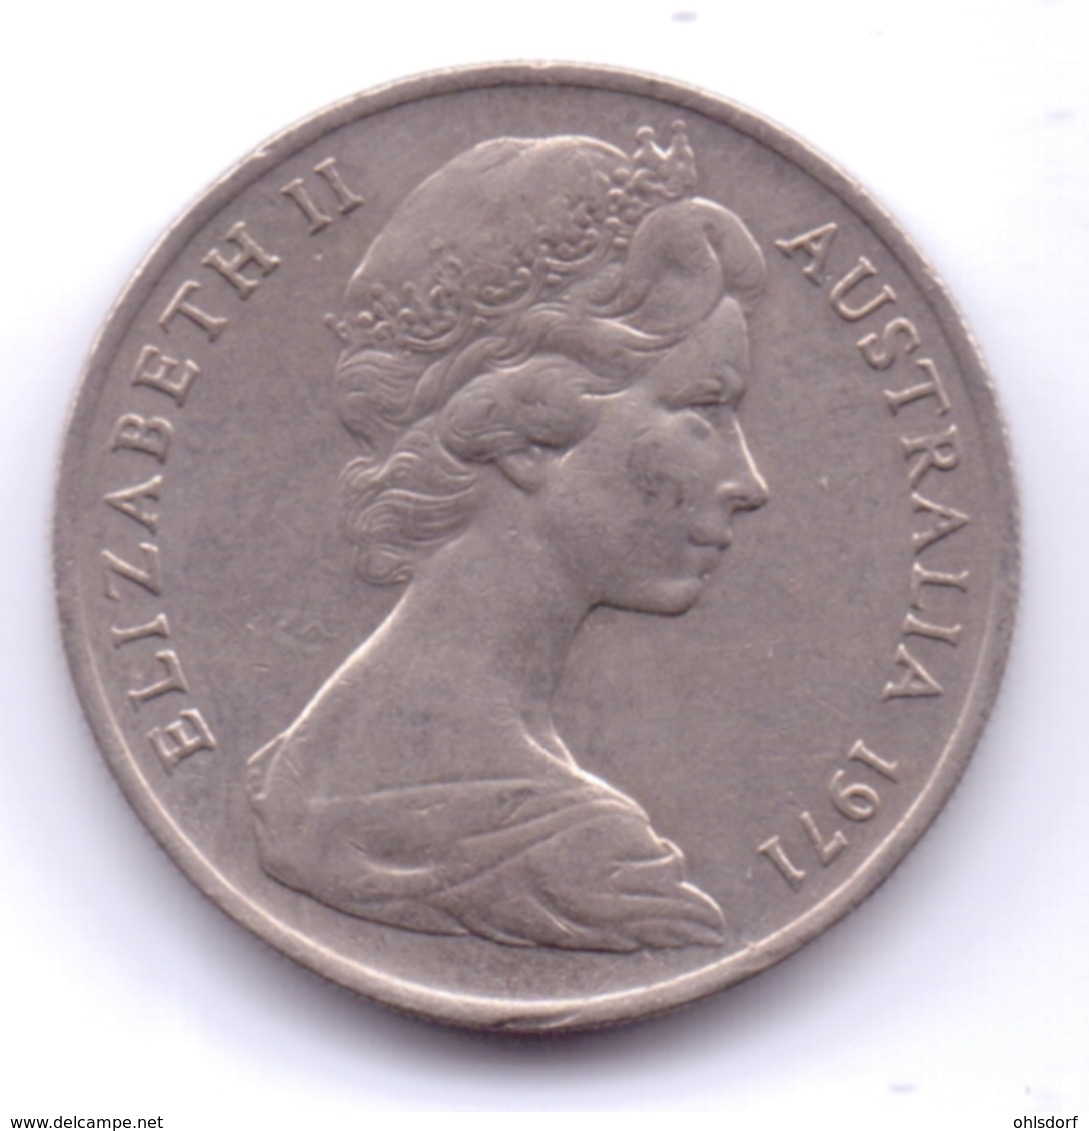 AUSTRALIA 1971: 10 Cents, KM 65 - 10 Cents